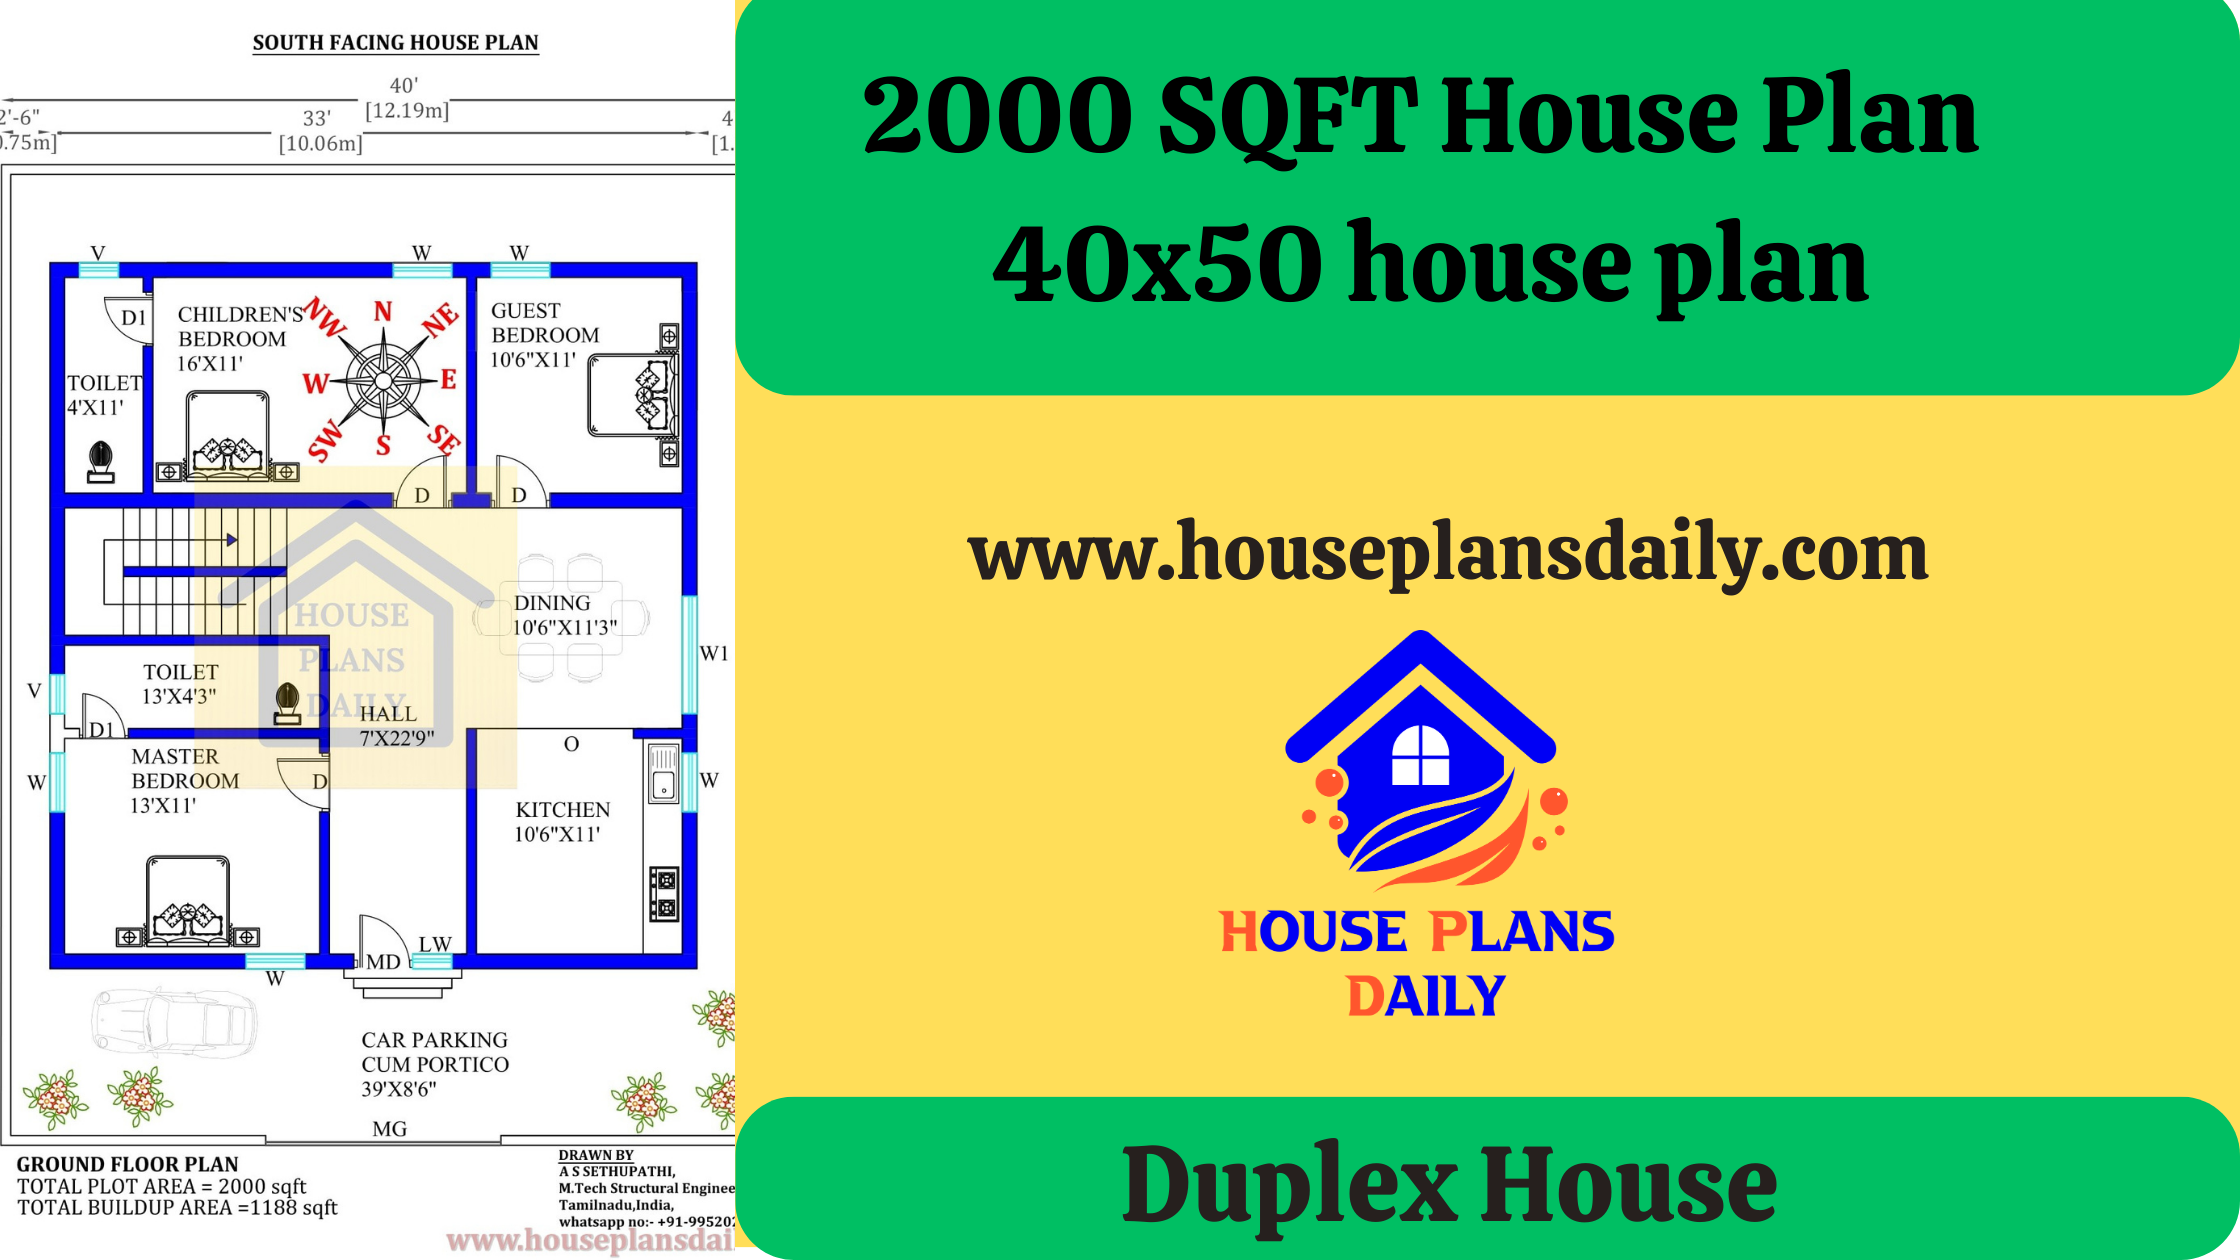 Duplex House | 2000 SQFT House Plan| 40x50 house plan